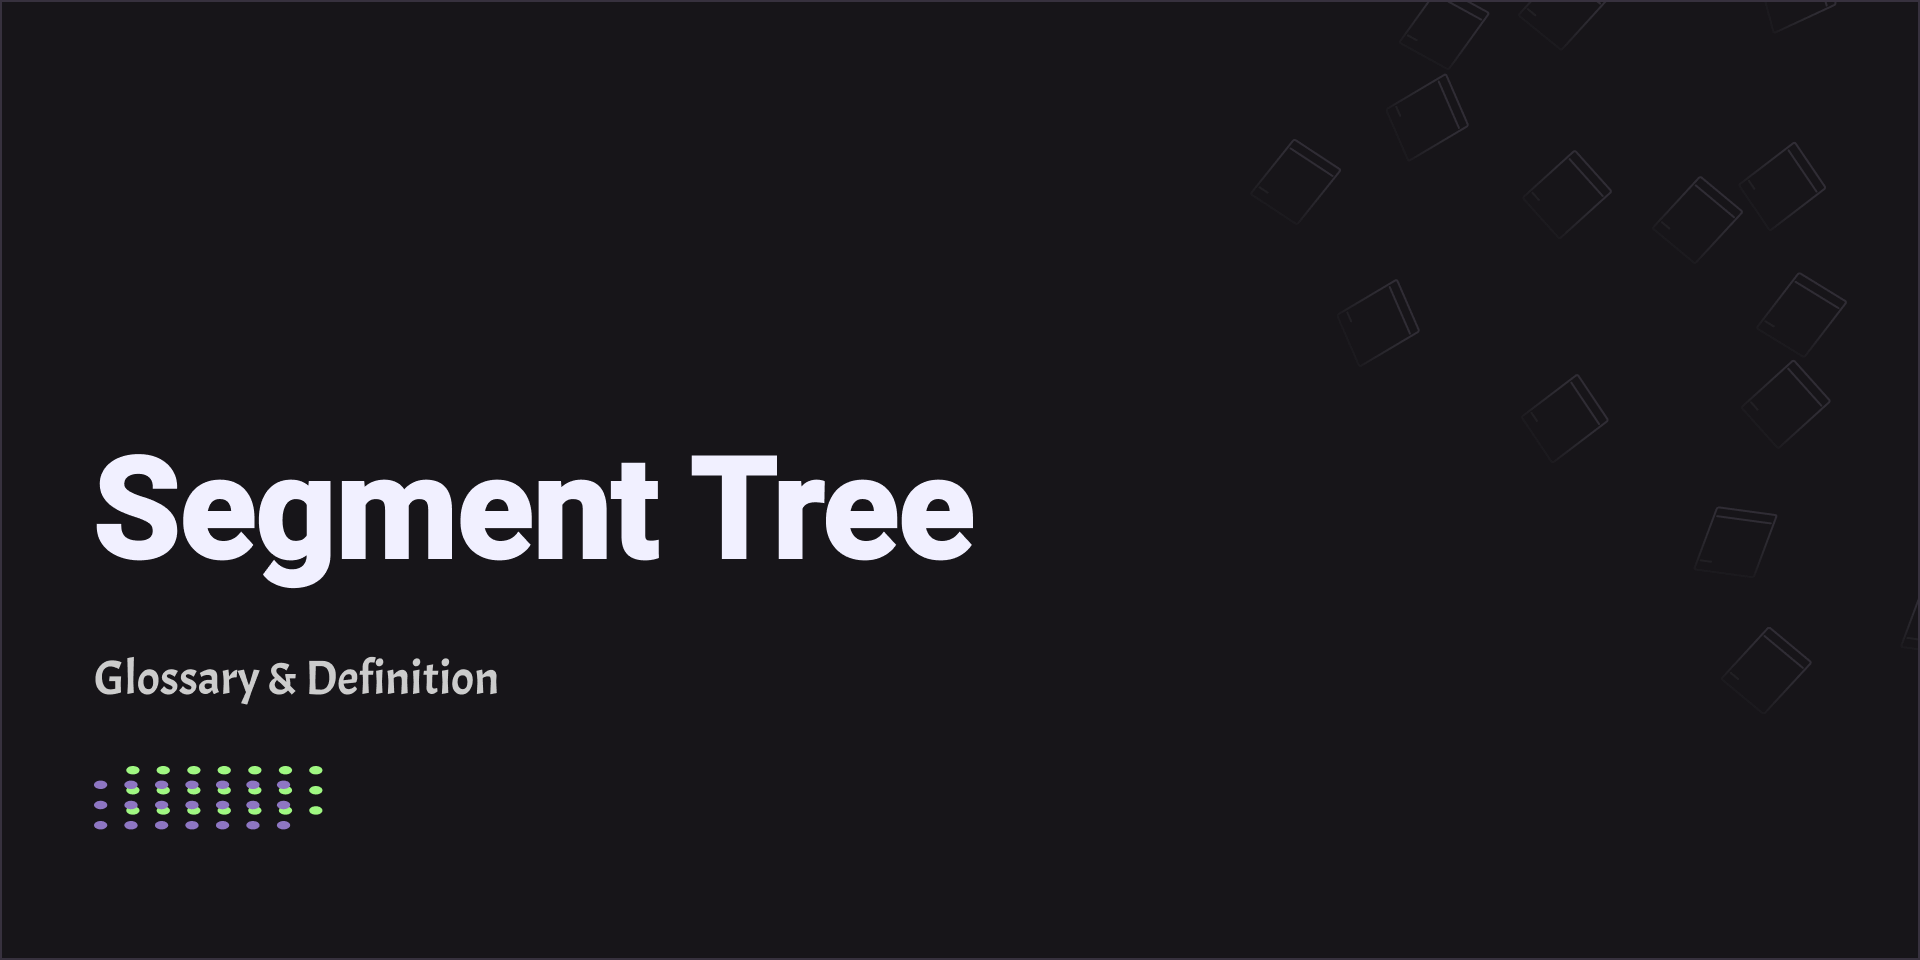 Segment Tree